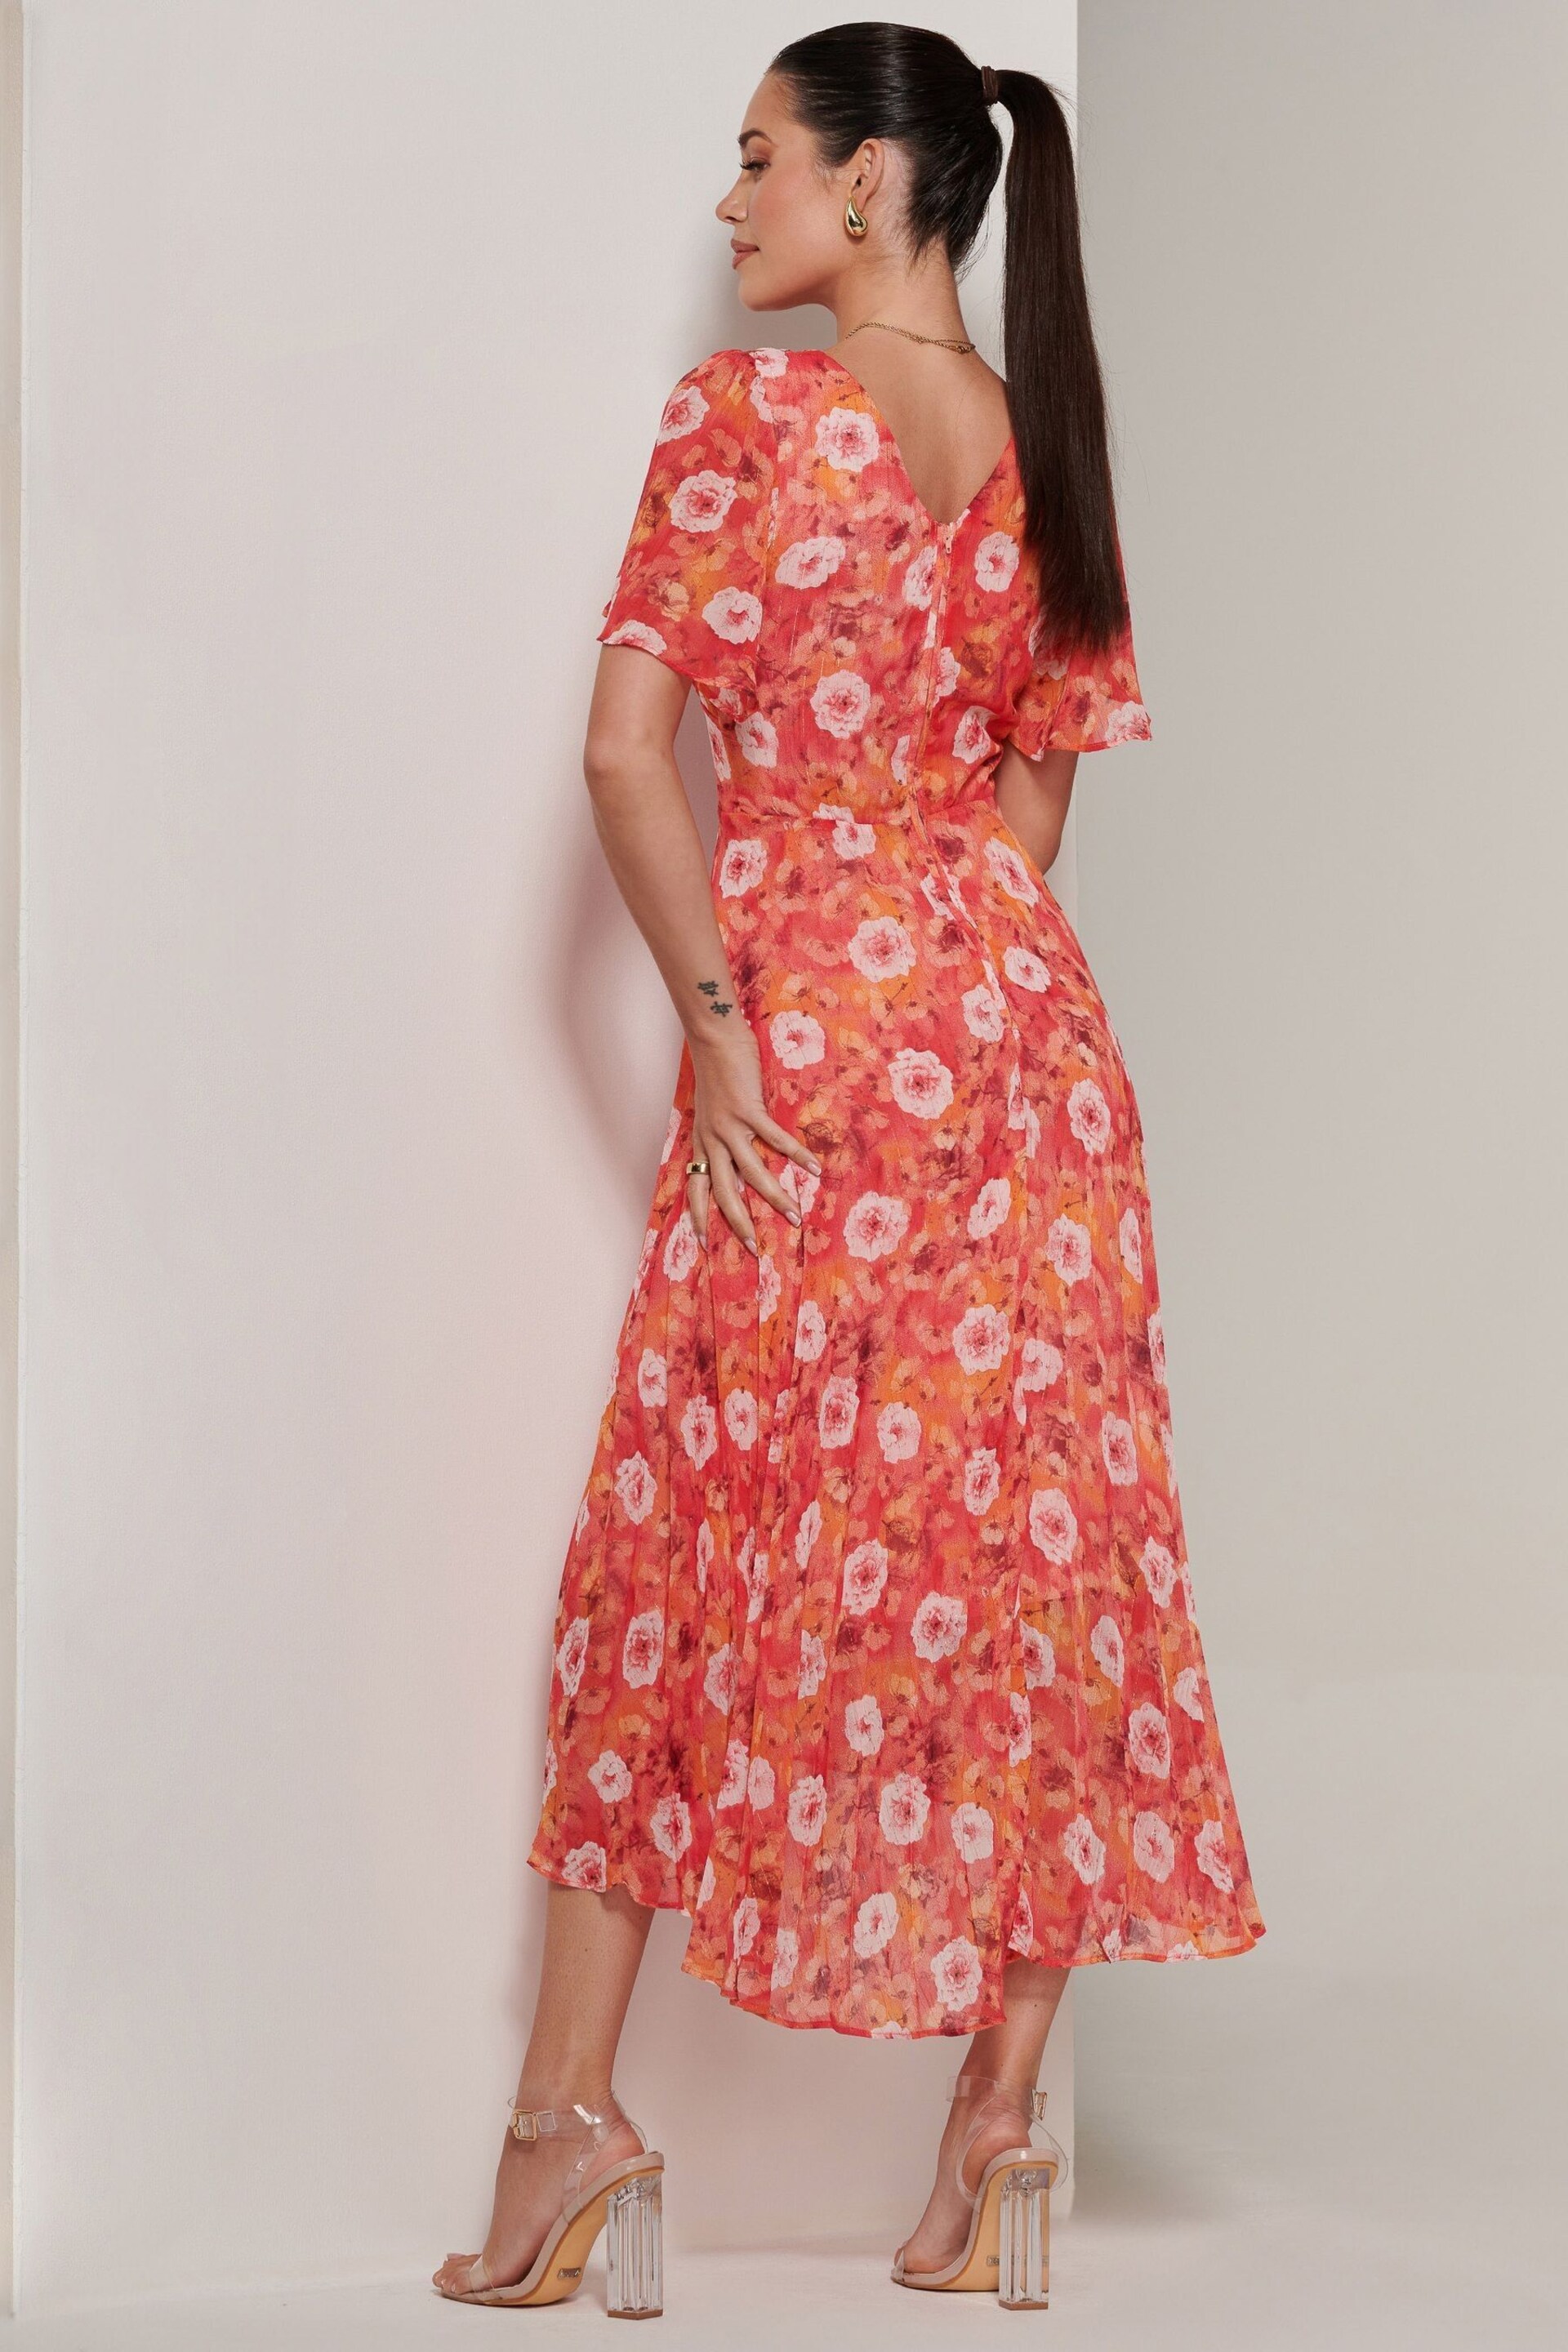 Jolie Moi Orange Pleated Dip Hem Chiffon Midaxi Dress - Image 2 of 6